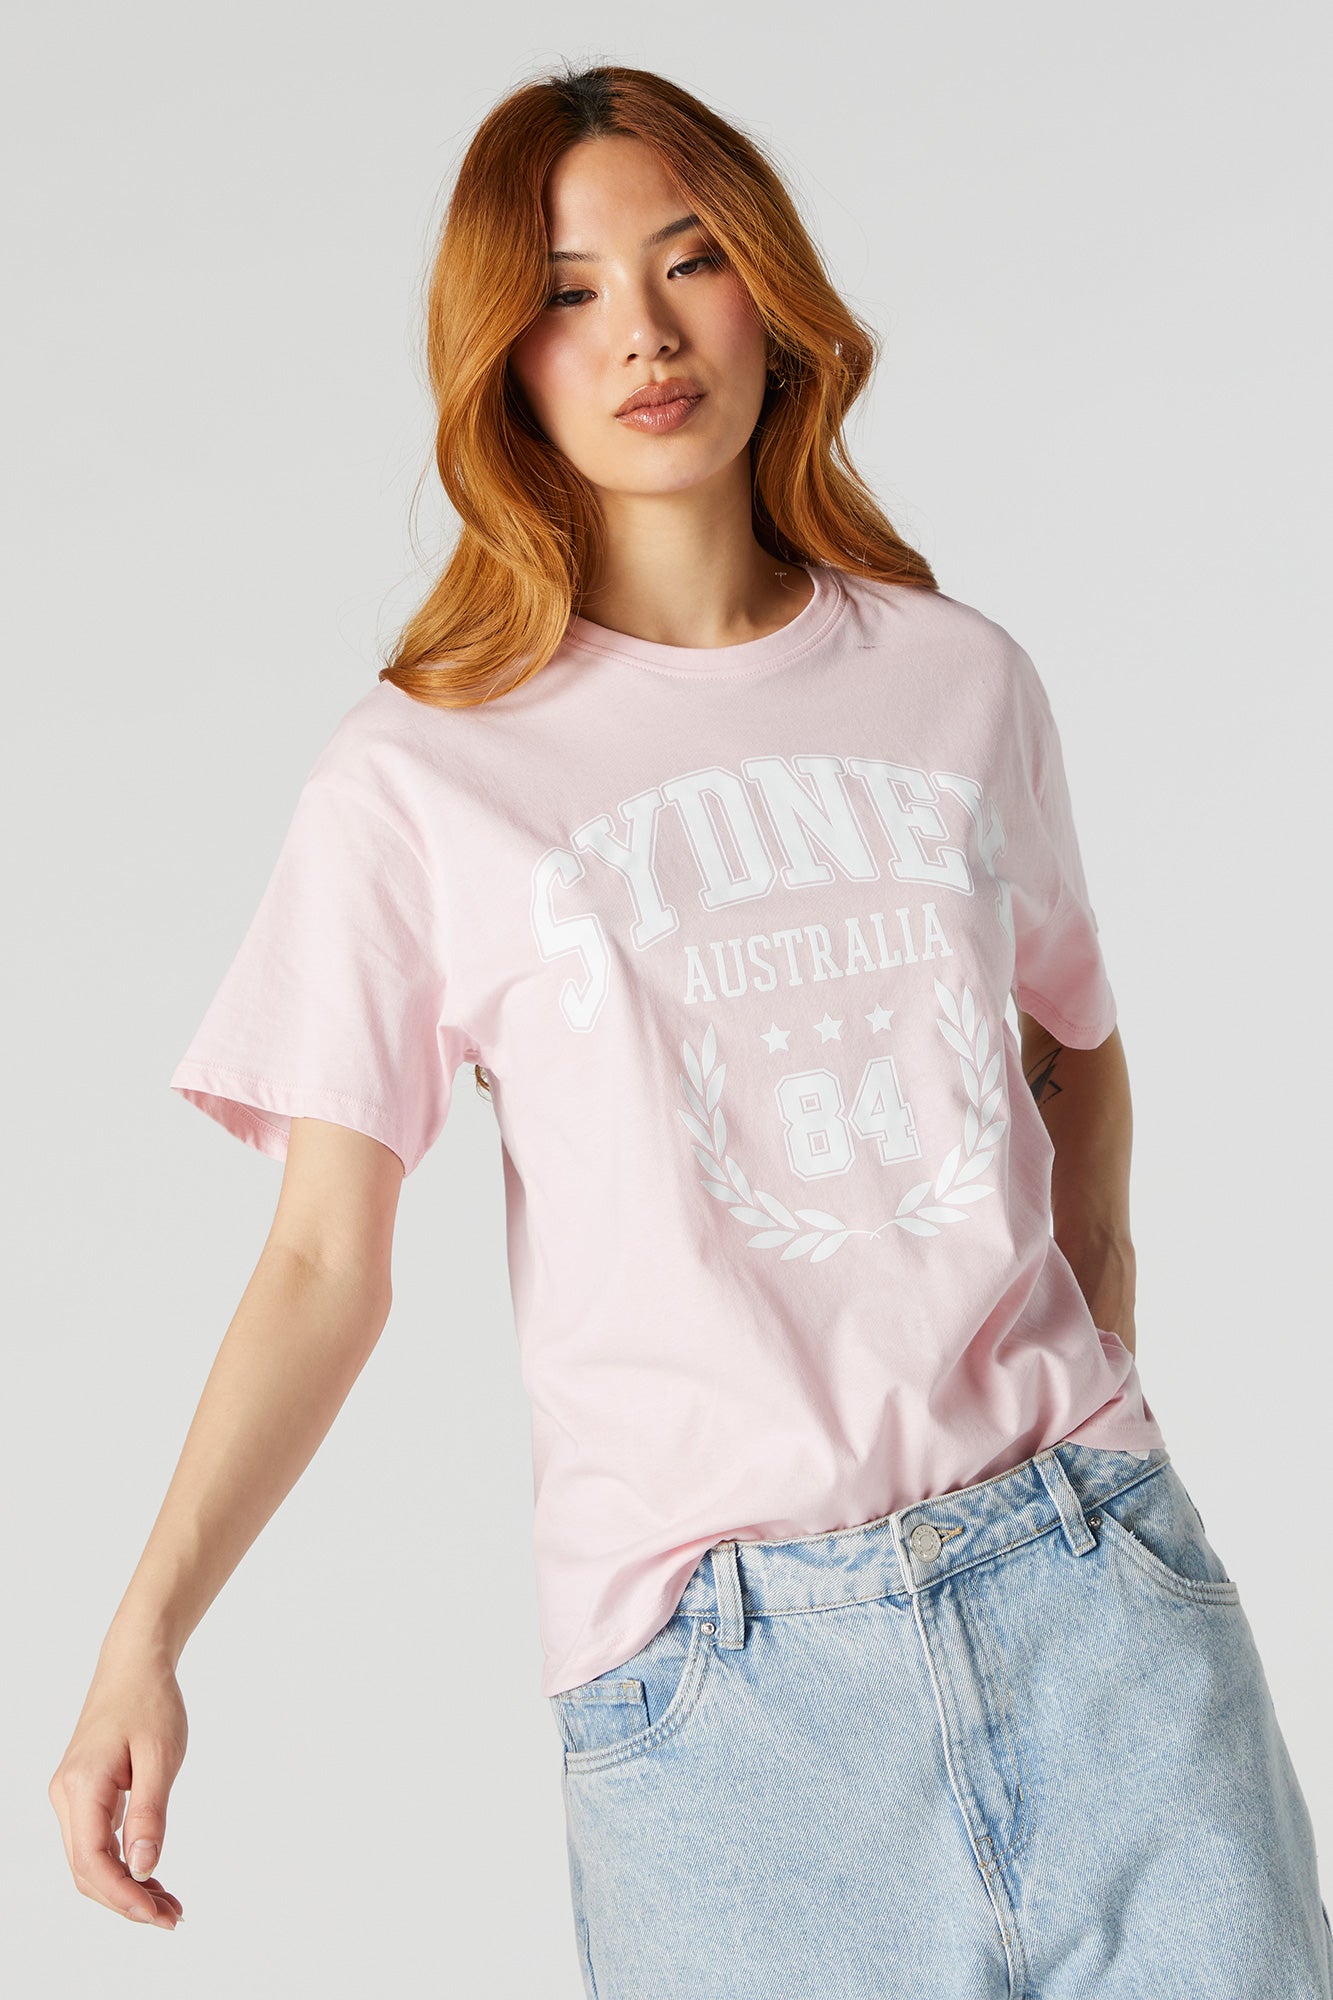 Sydney Australia Graphic Boyfriend T-Shirt